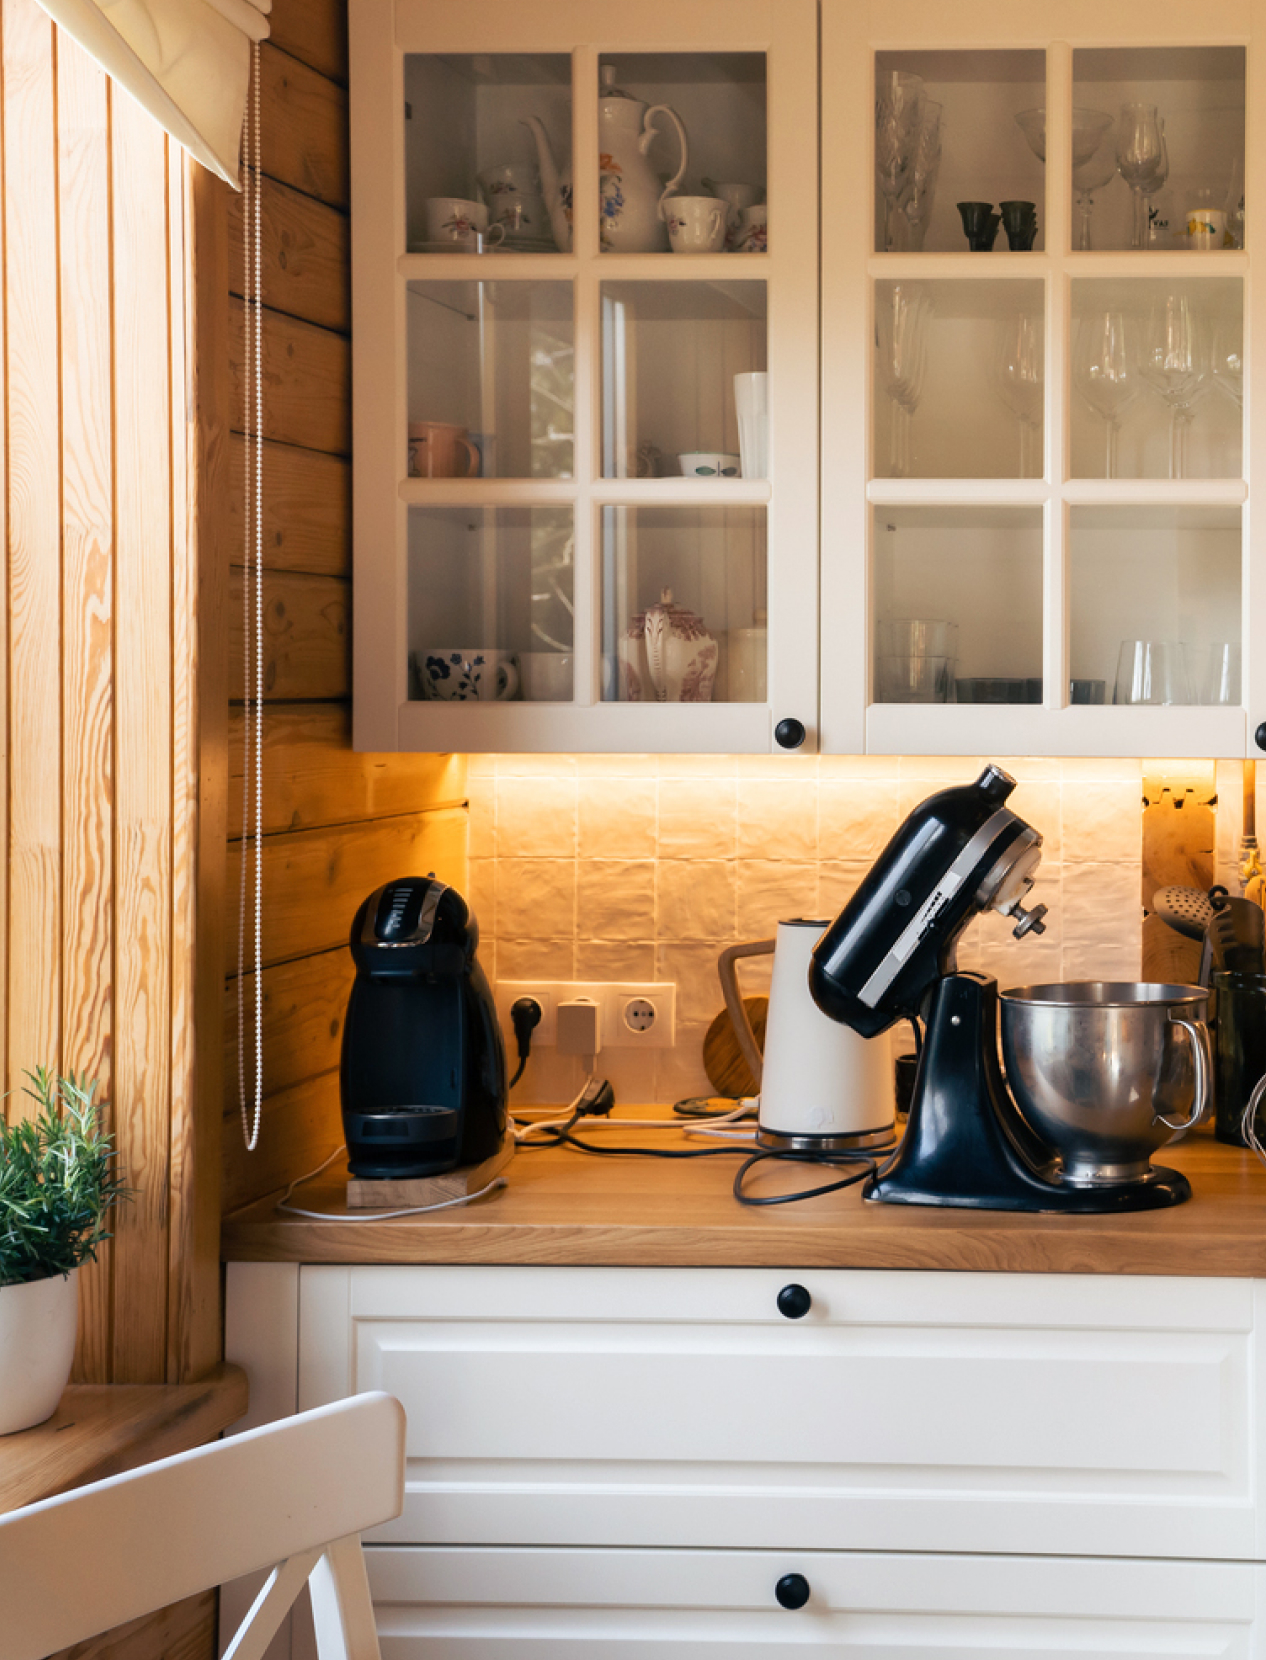 Kitchen counter with espresso machine and Kitchenaid